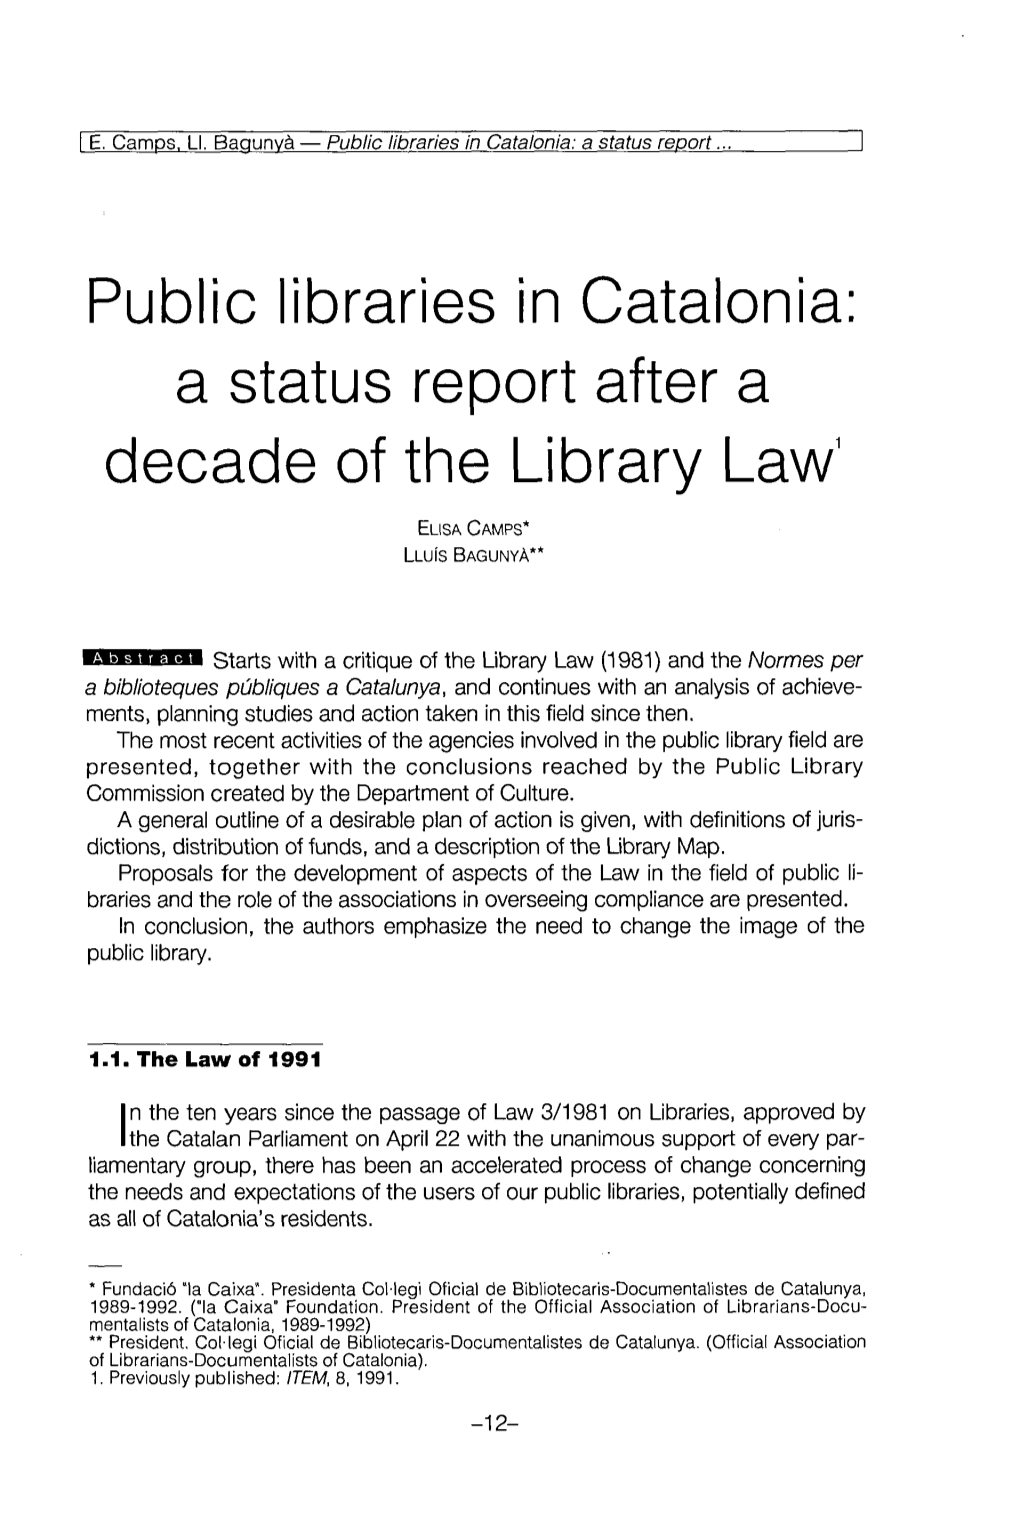 Public Libraries in Catalonia: a Status Report